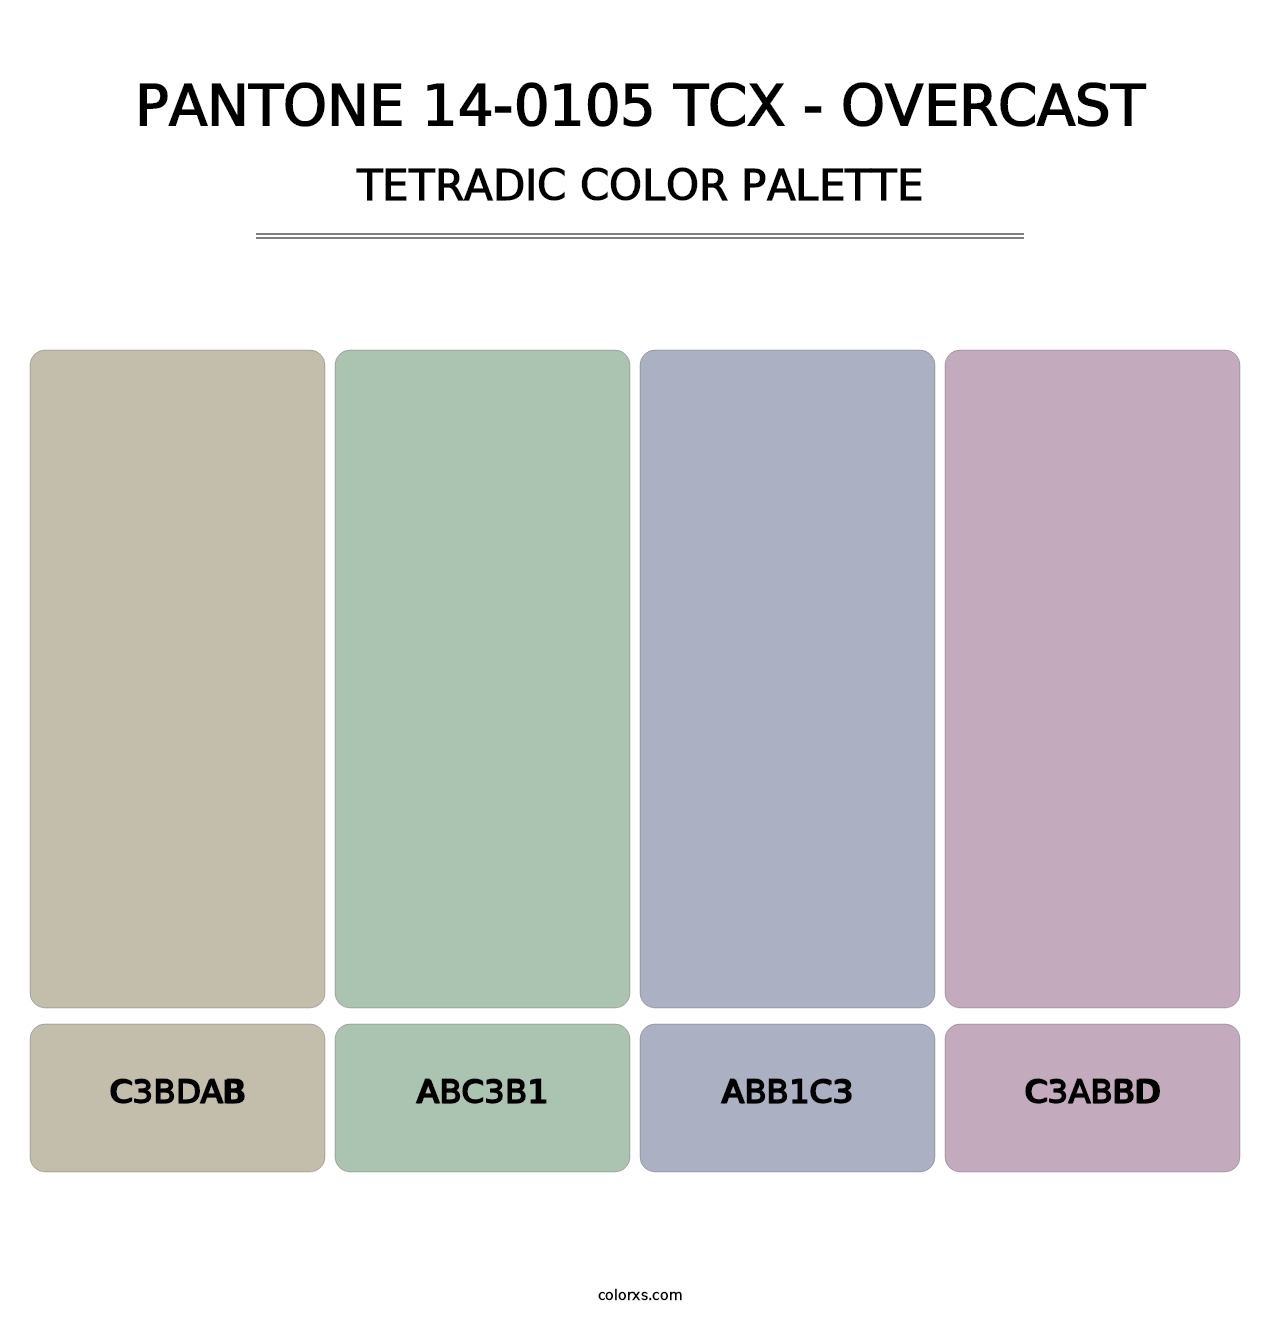 PANTONE 14-0105 TCX - Overcast - Tetradic Color Palette